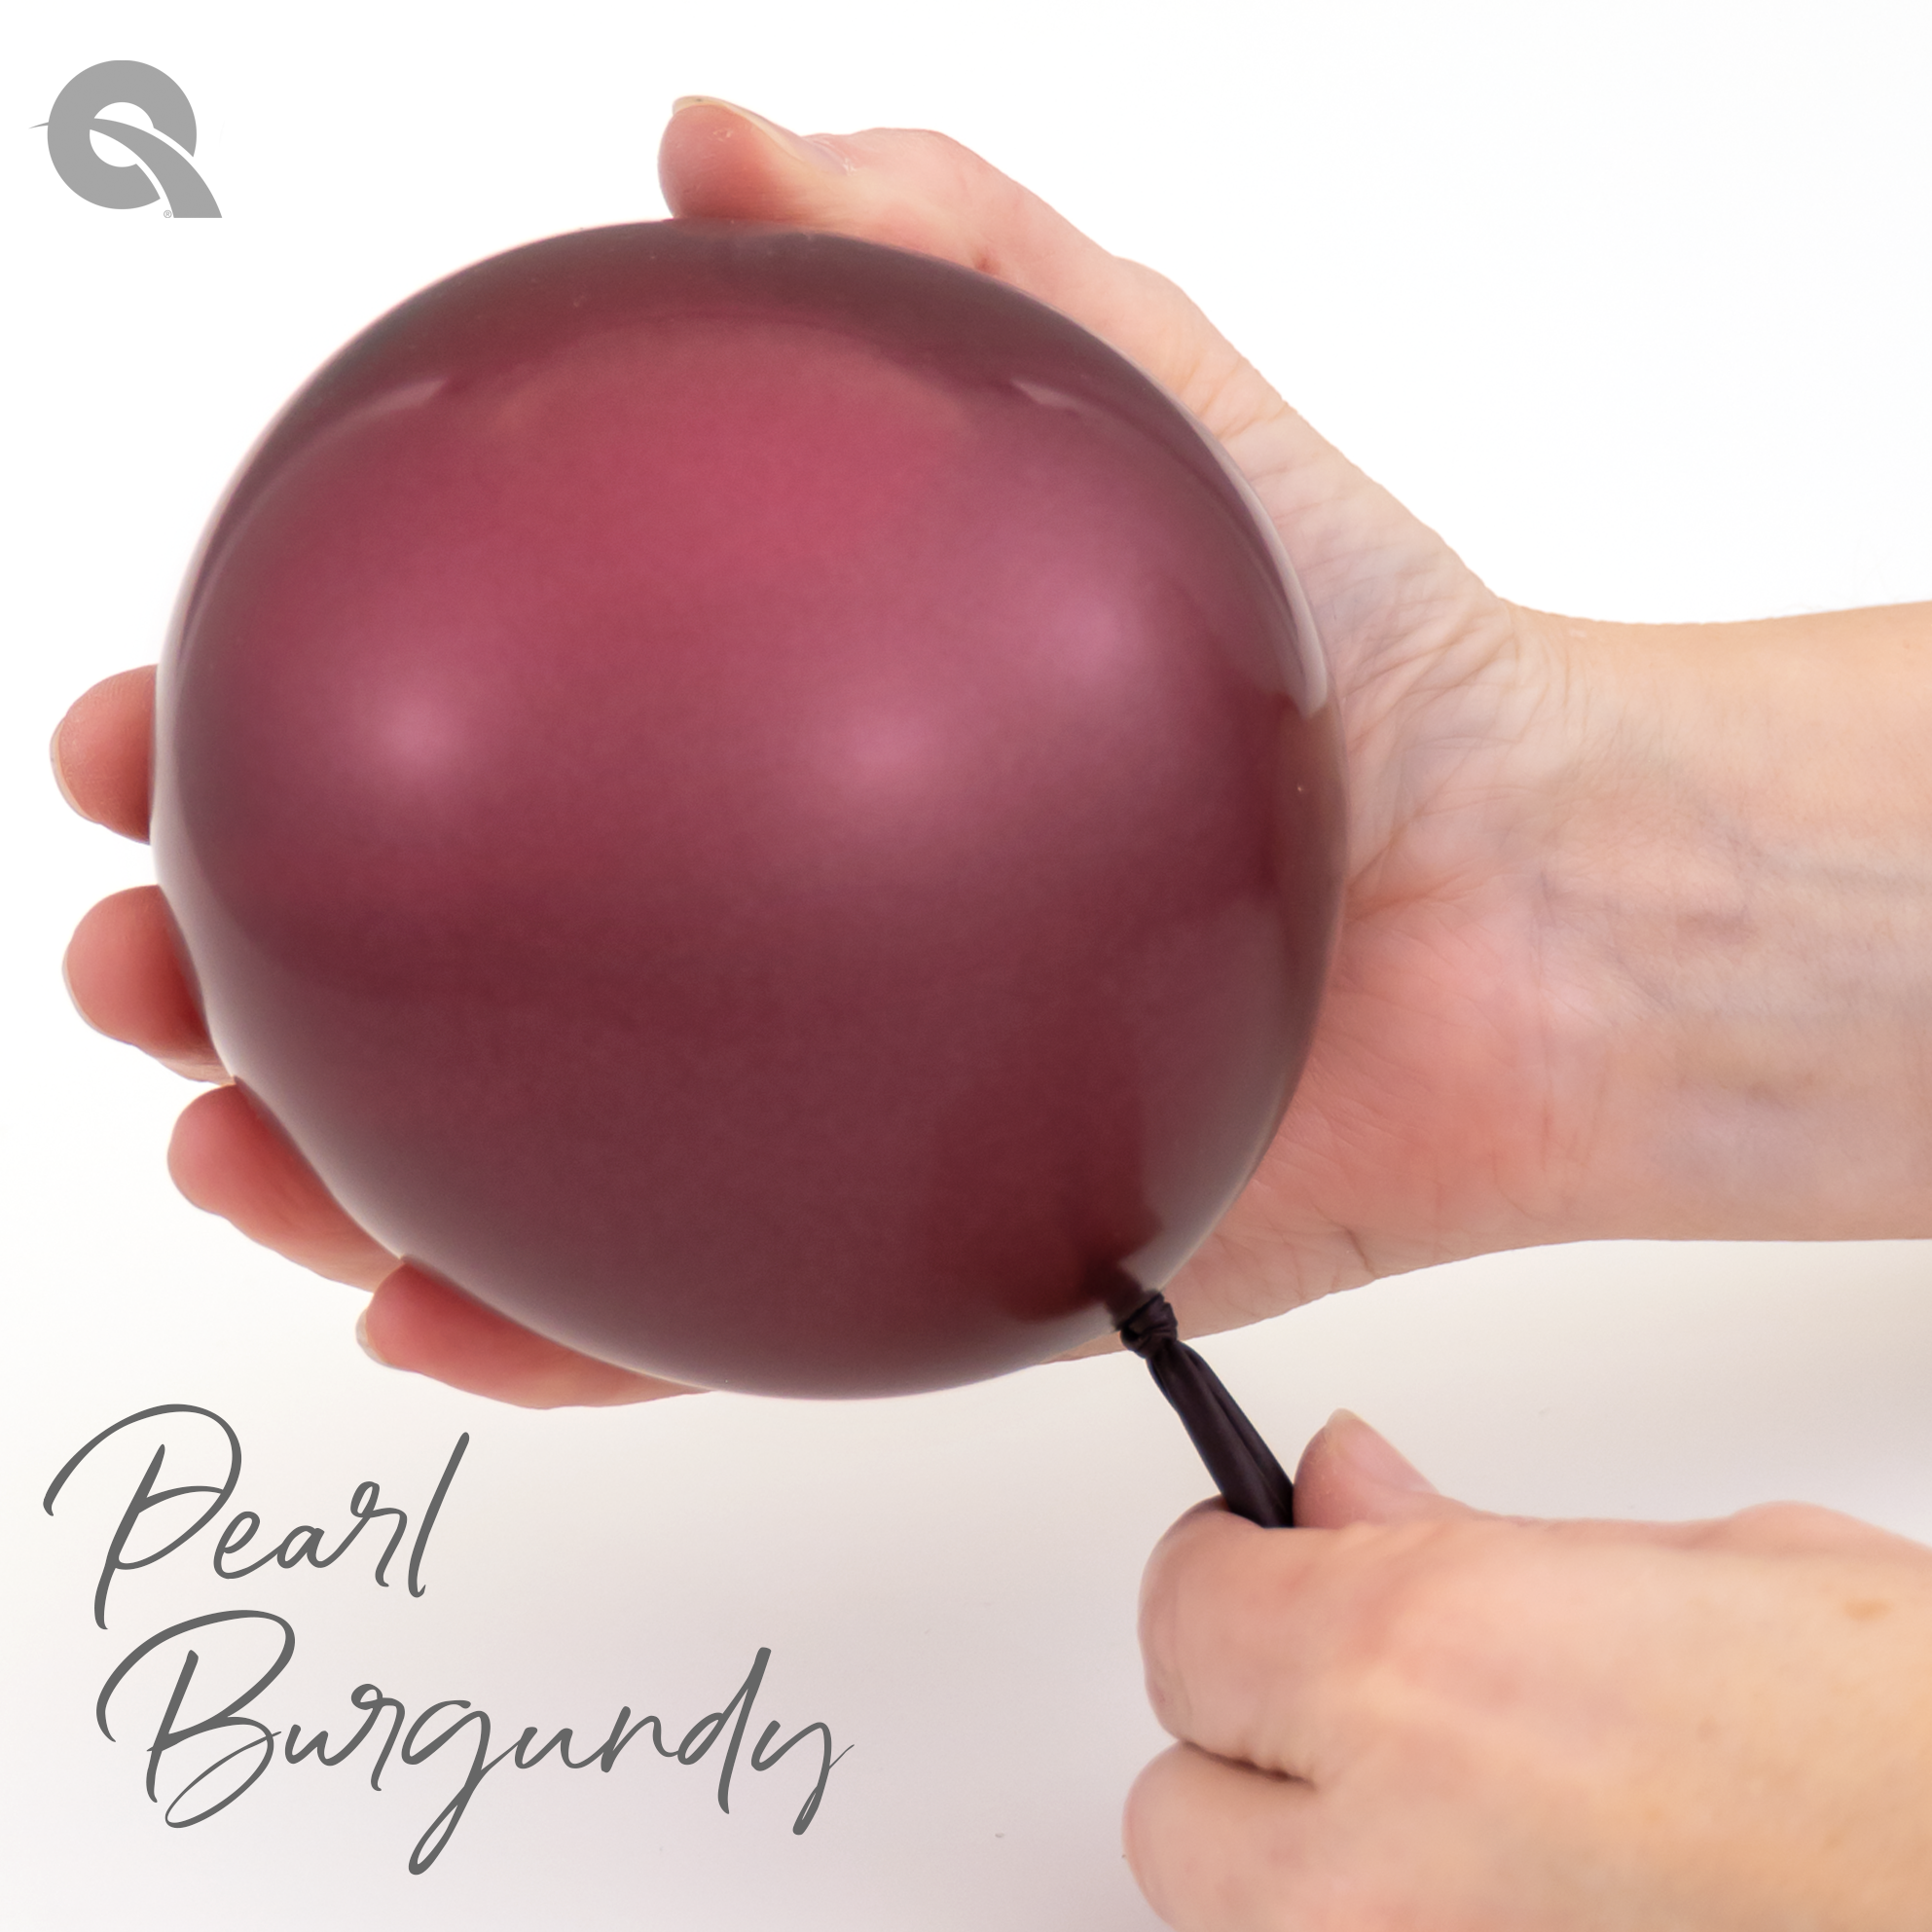 5" Qualatex Radient Pearl Burgundy Latex Balloons | 100 Count